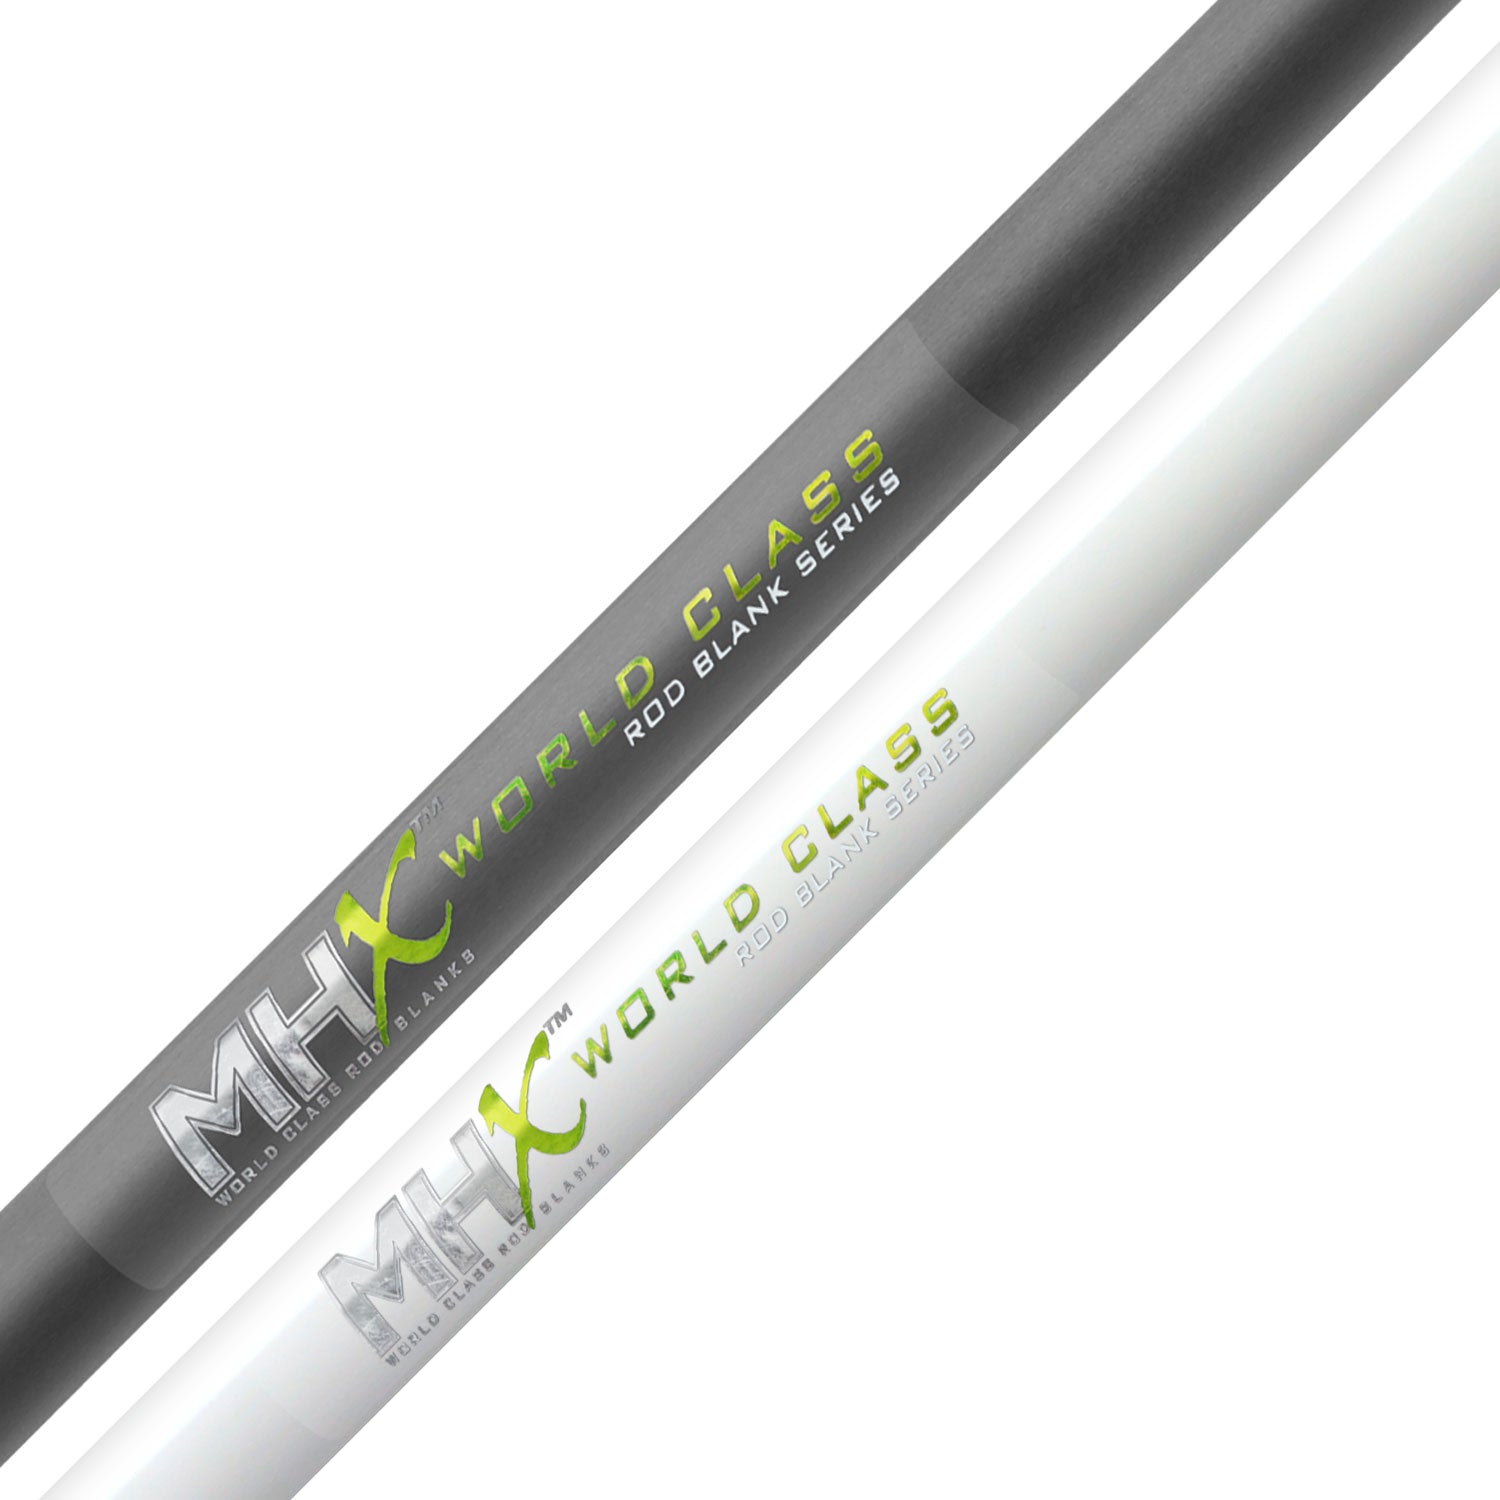 MHX 7'6 Med-Heavy Flipping Stick Rod Blank - FS904